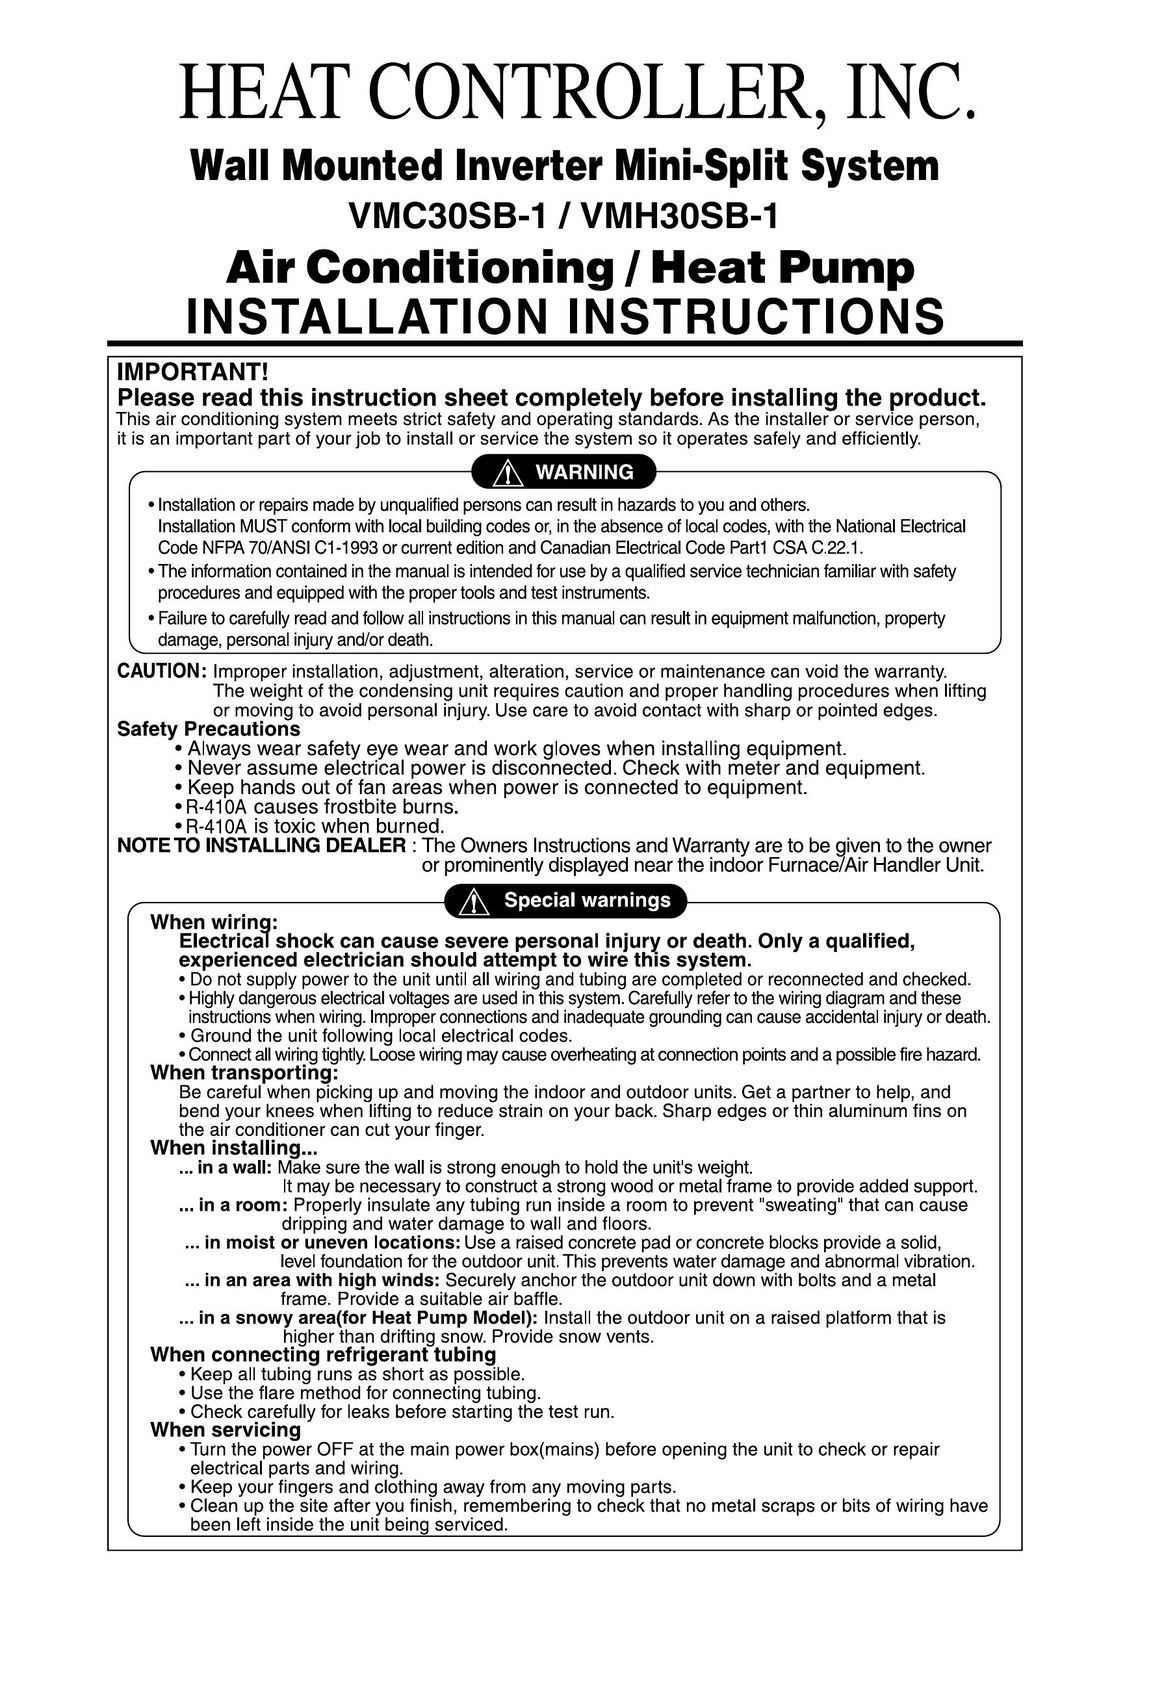 Celestron VMH30SB-1 Heat Pump User Manual